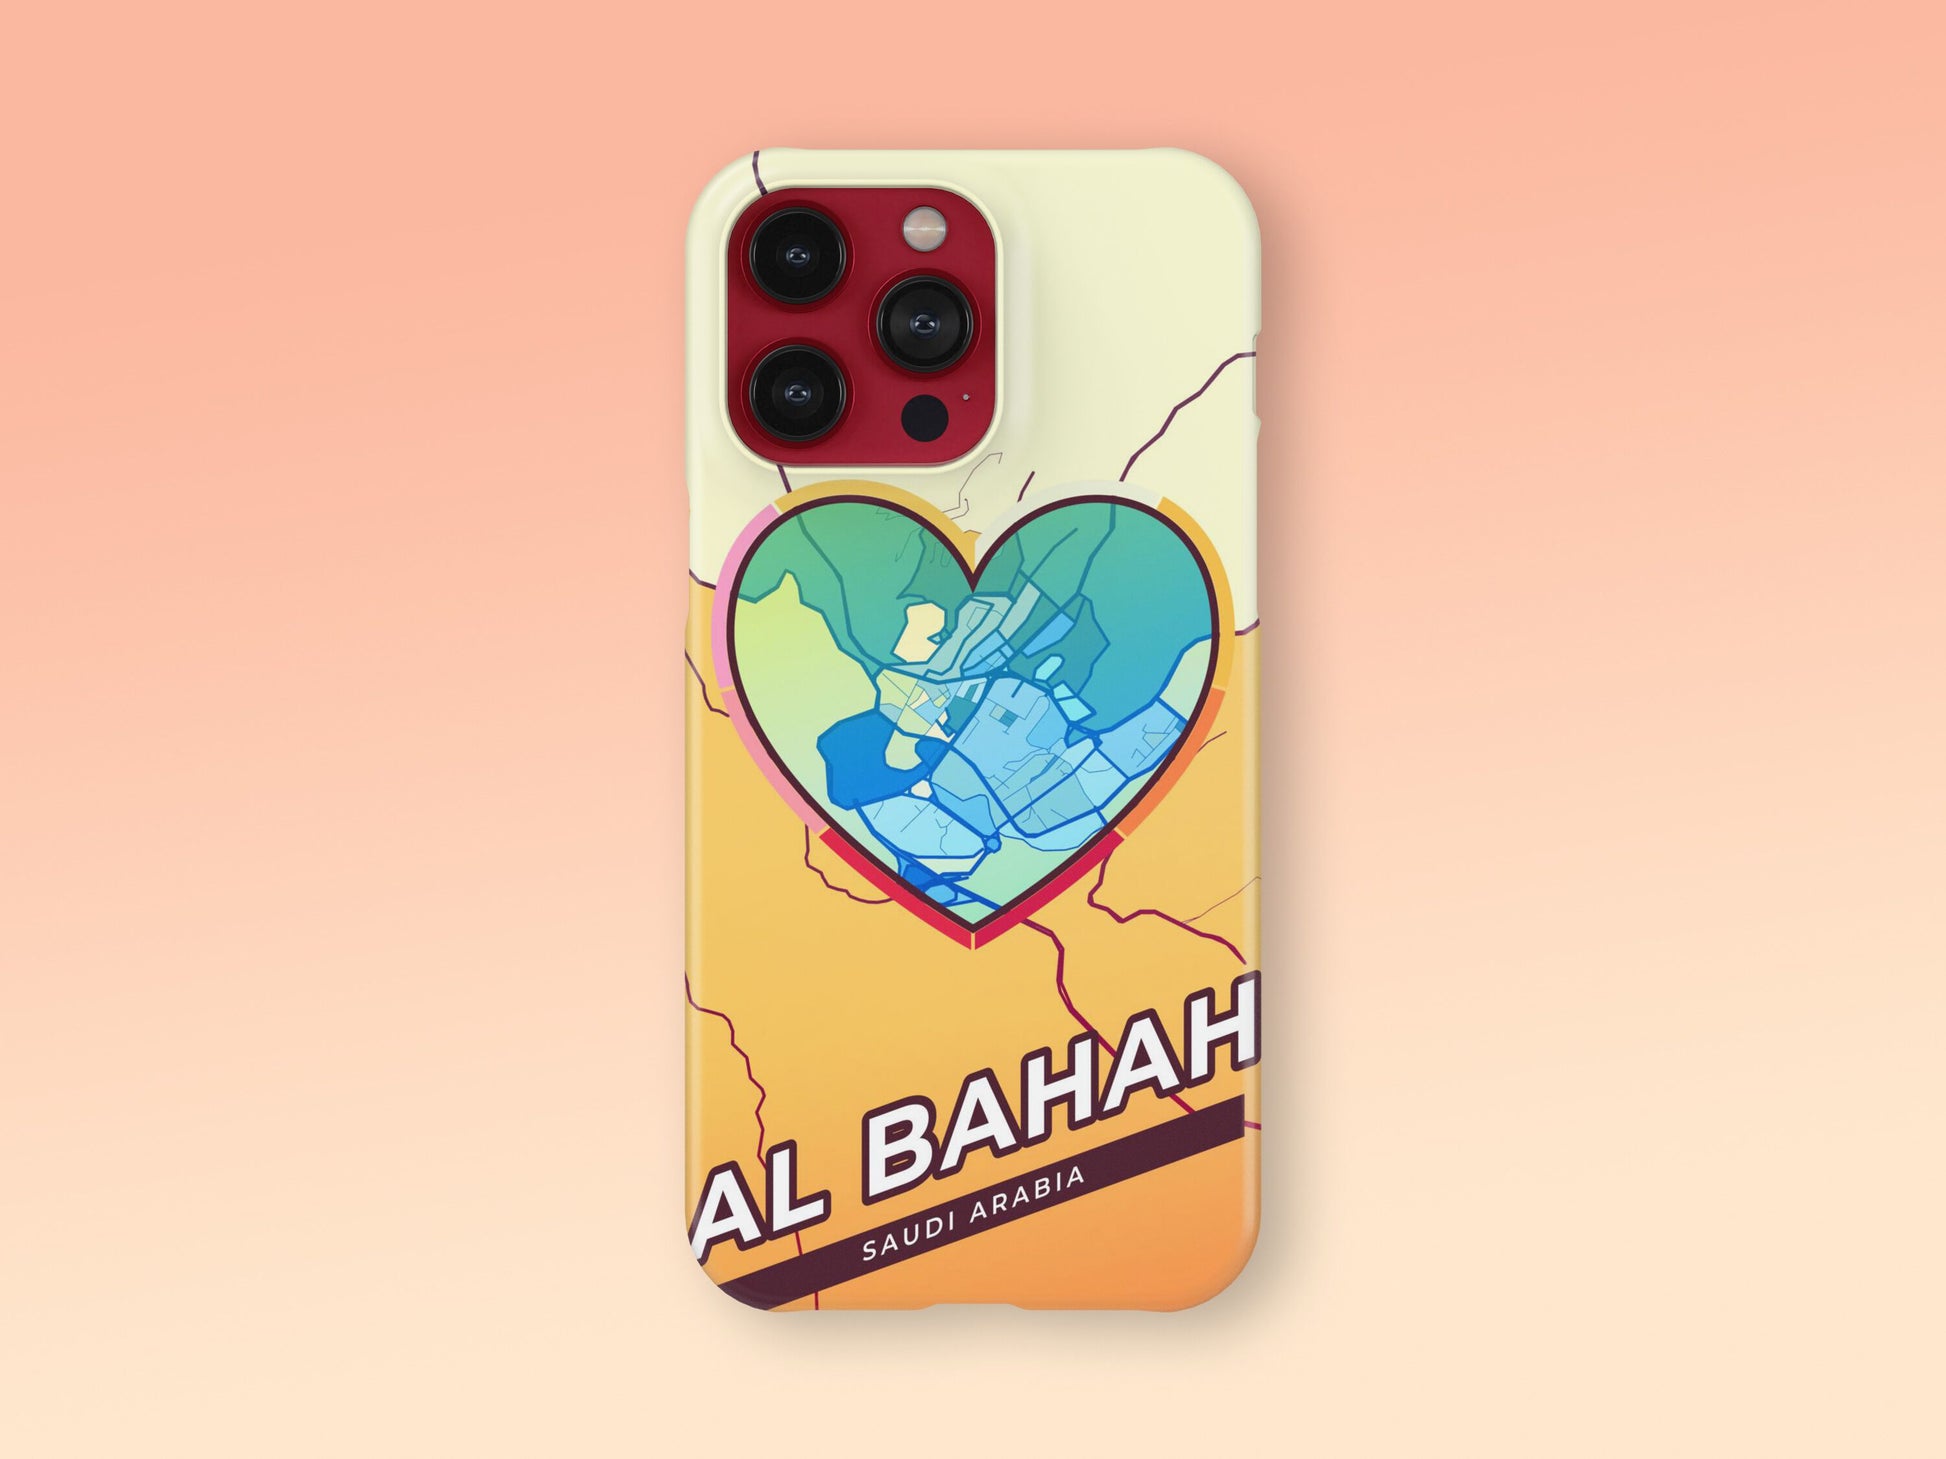 Al Bahah Saudi Arabia slim phone case with colorful icon. Birthday, wedding or housewarming gift. Couple match cases. 2